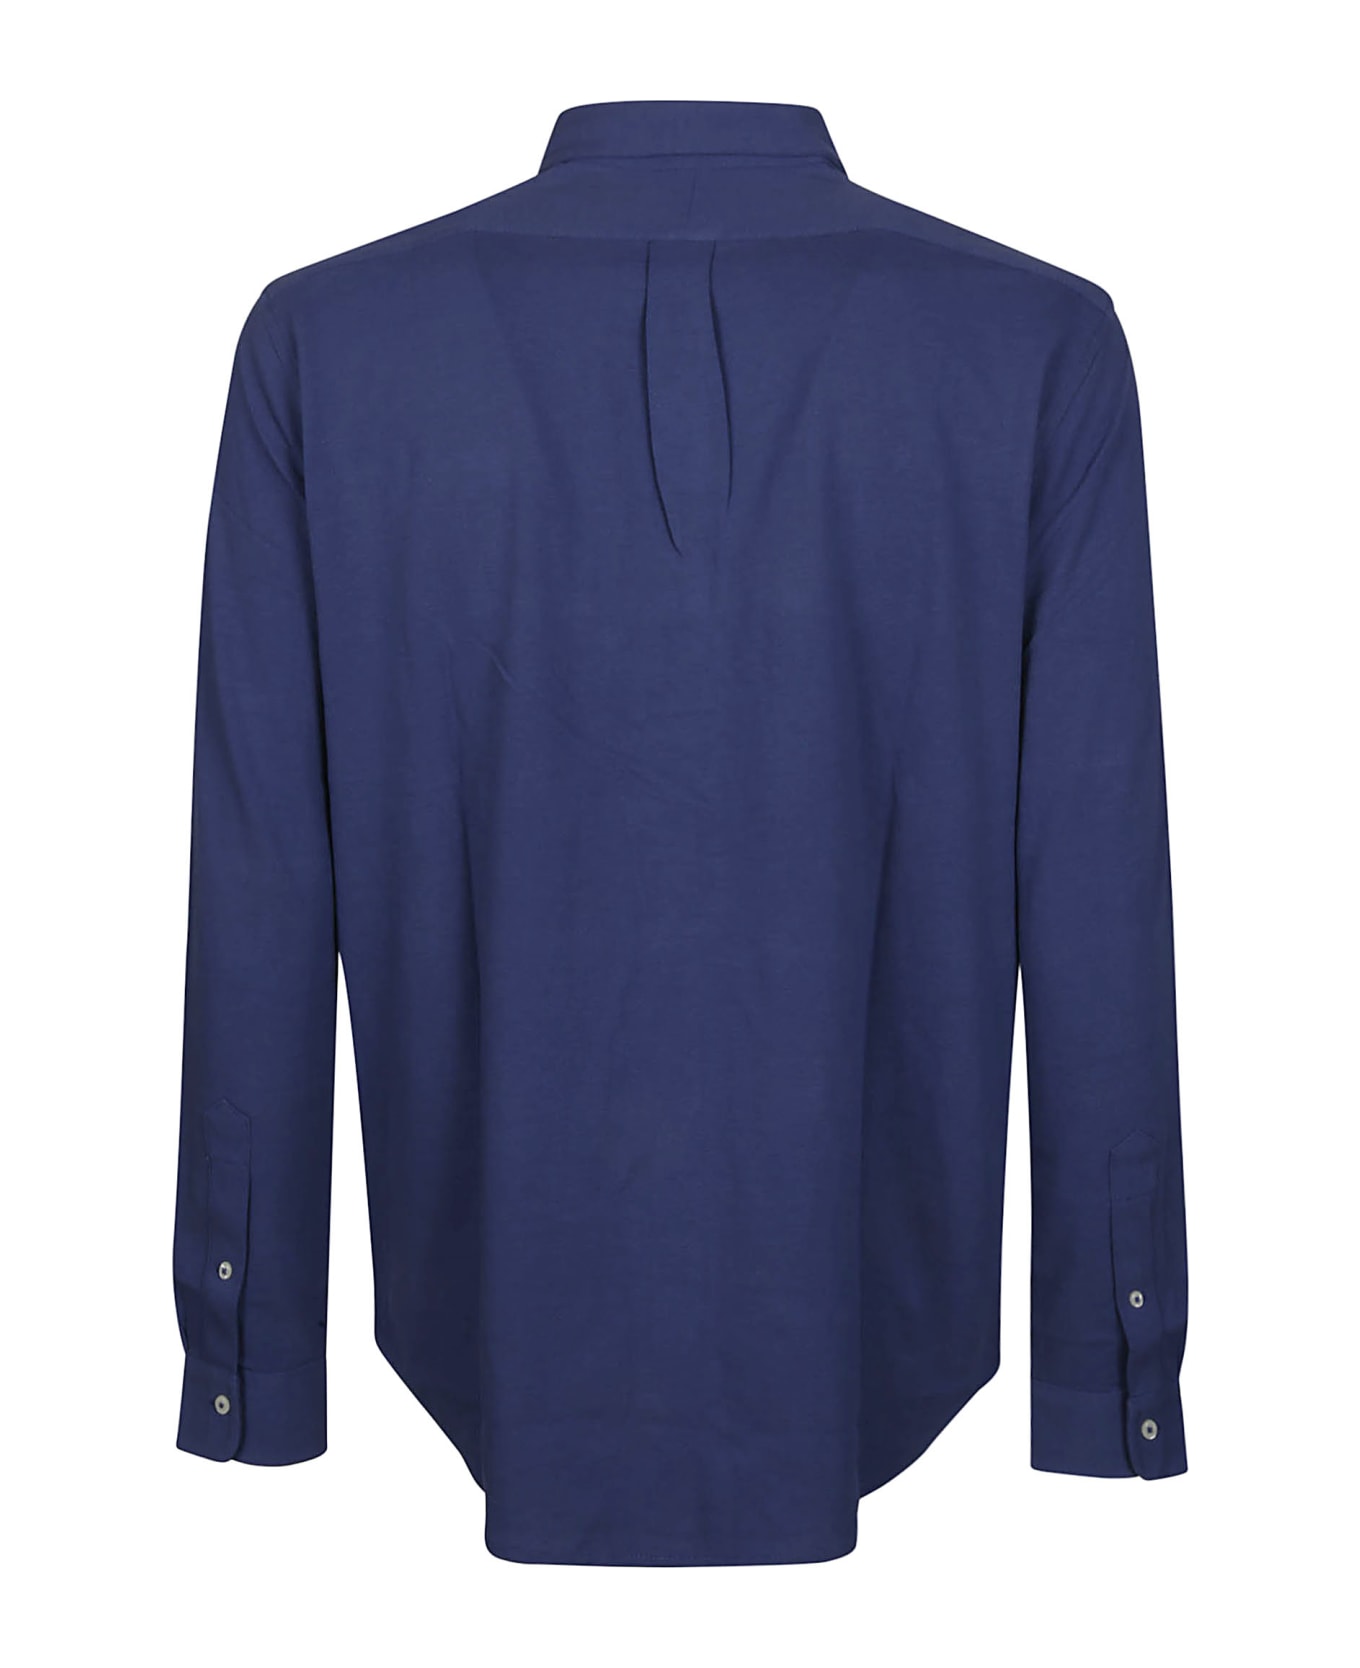 Polo Ralph Lauren Long Sleeve Shirt - Old Royal